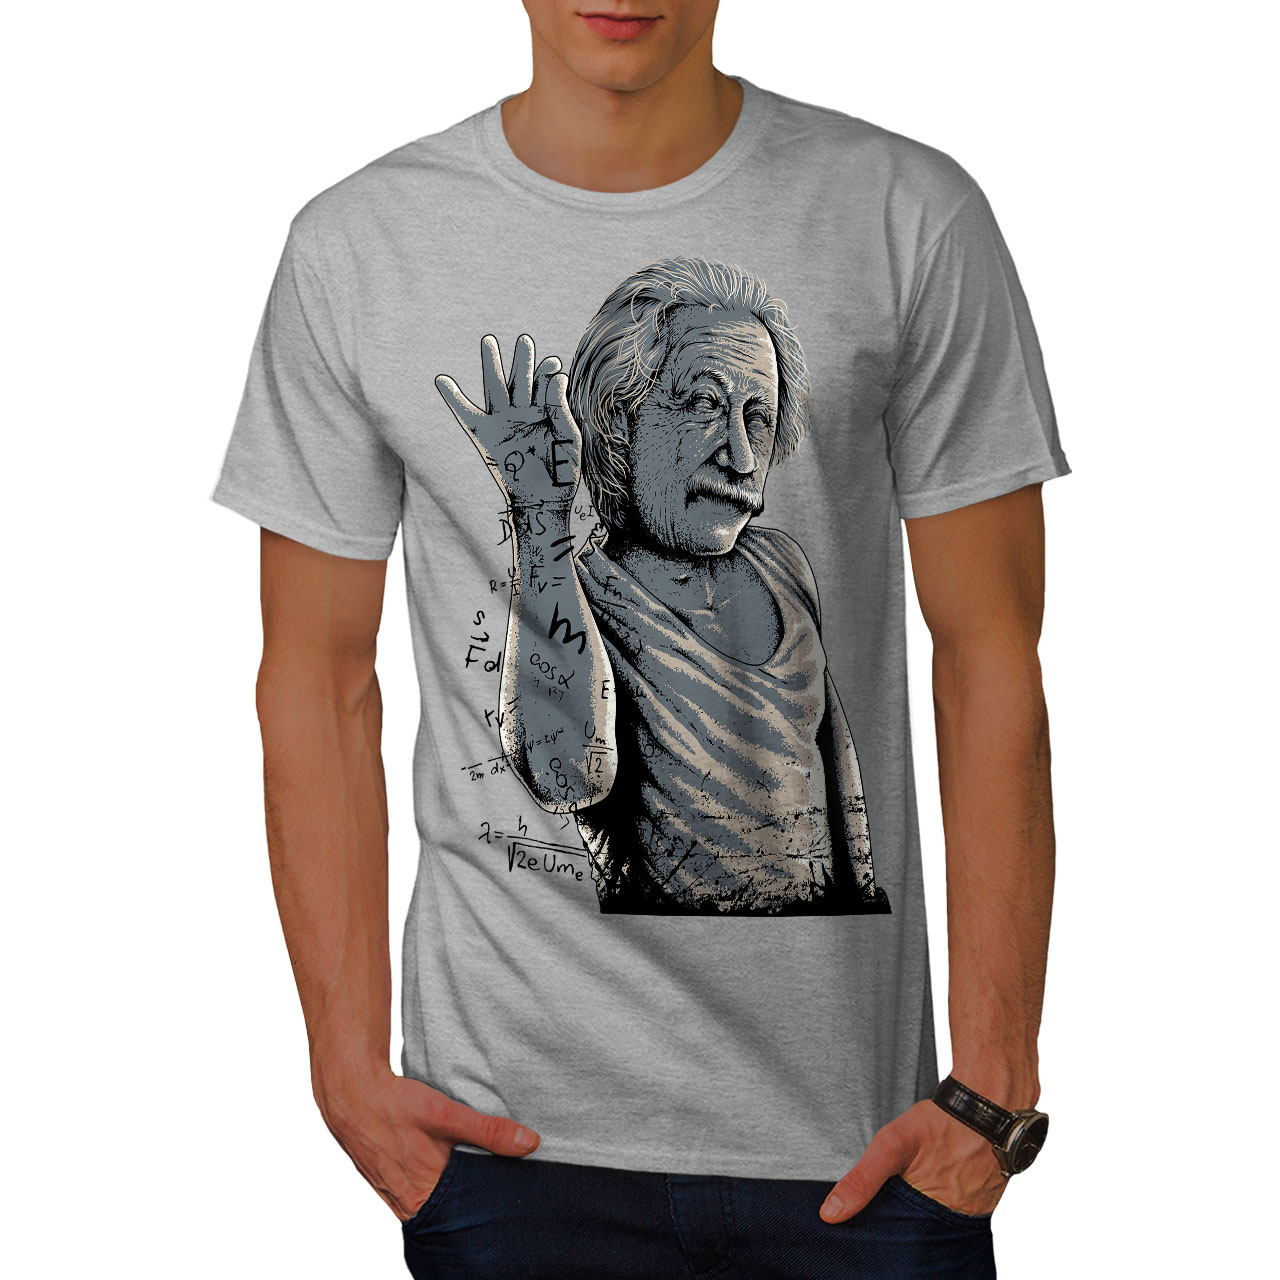 Wellcoda Salt Bae Mens T-shirt, Funny Meme Graphic Design Printed Tee ...